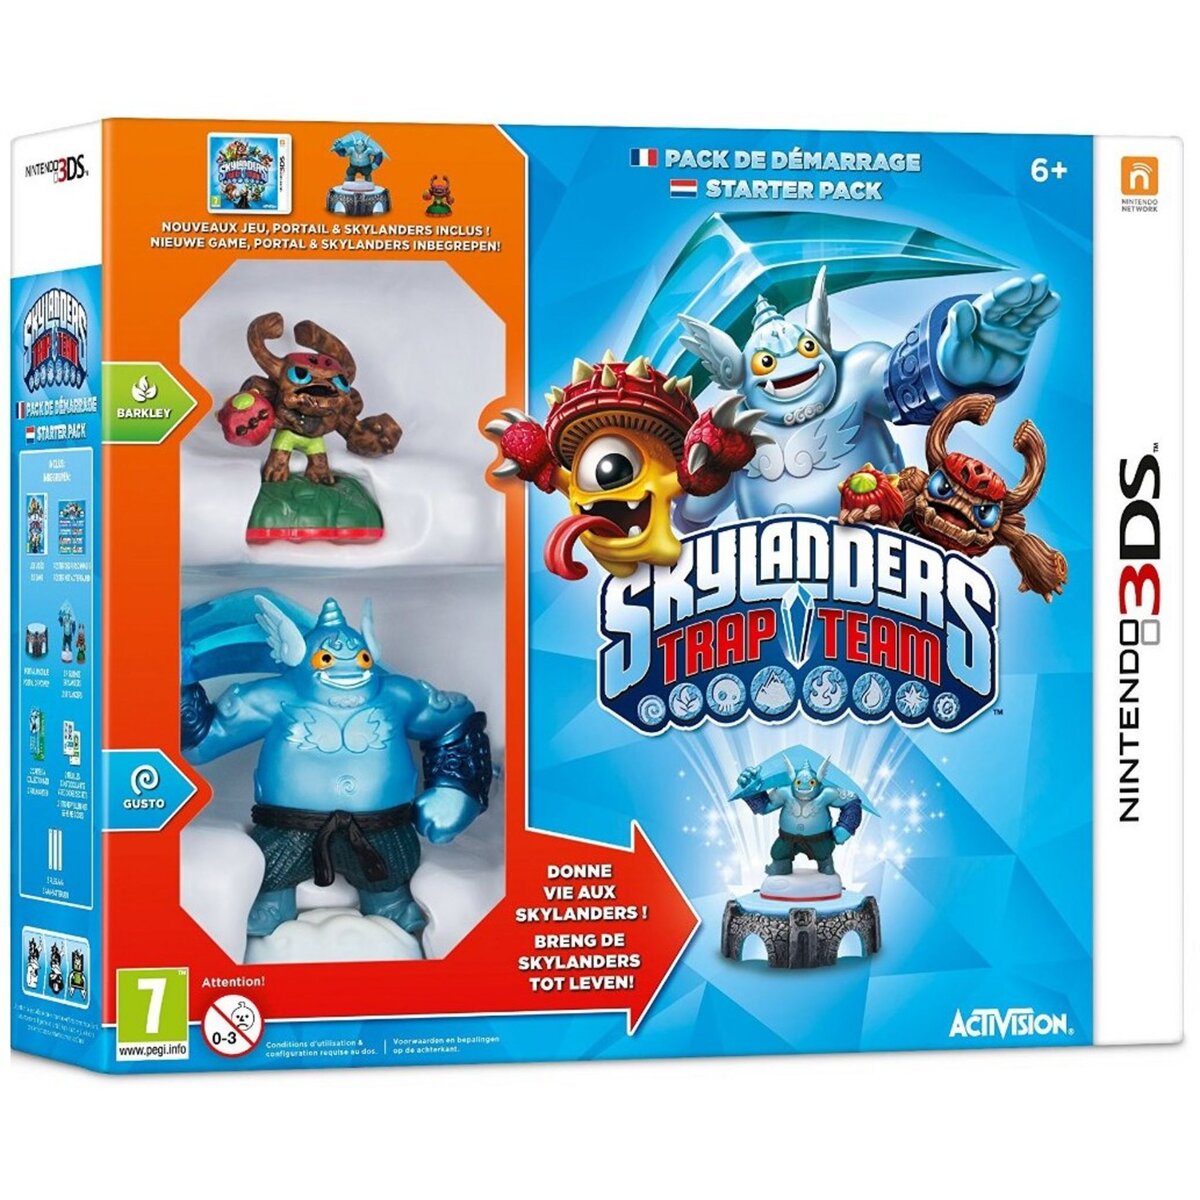 Skylanders Trap Team 3DS - Pack de démarrage